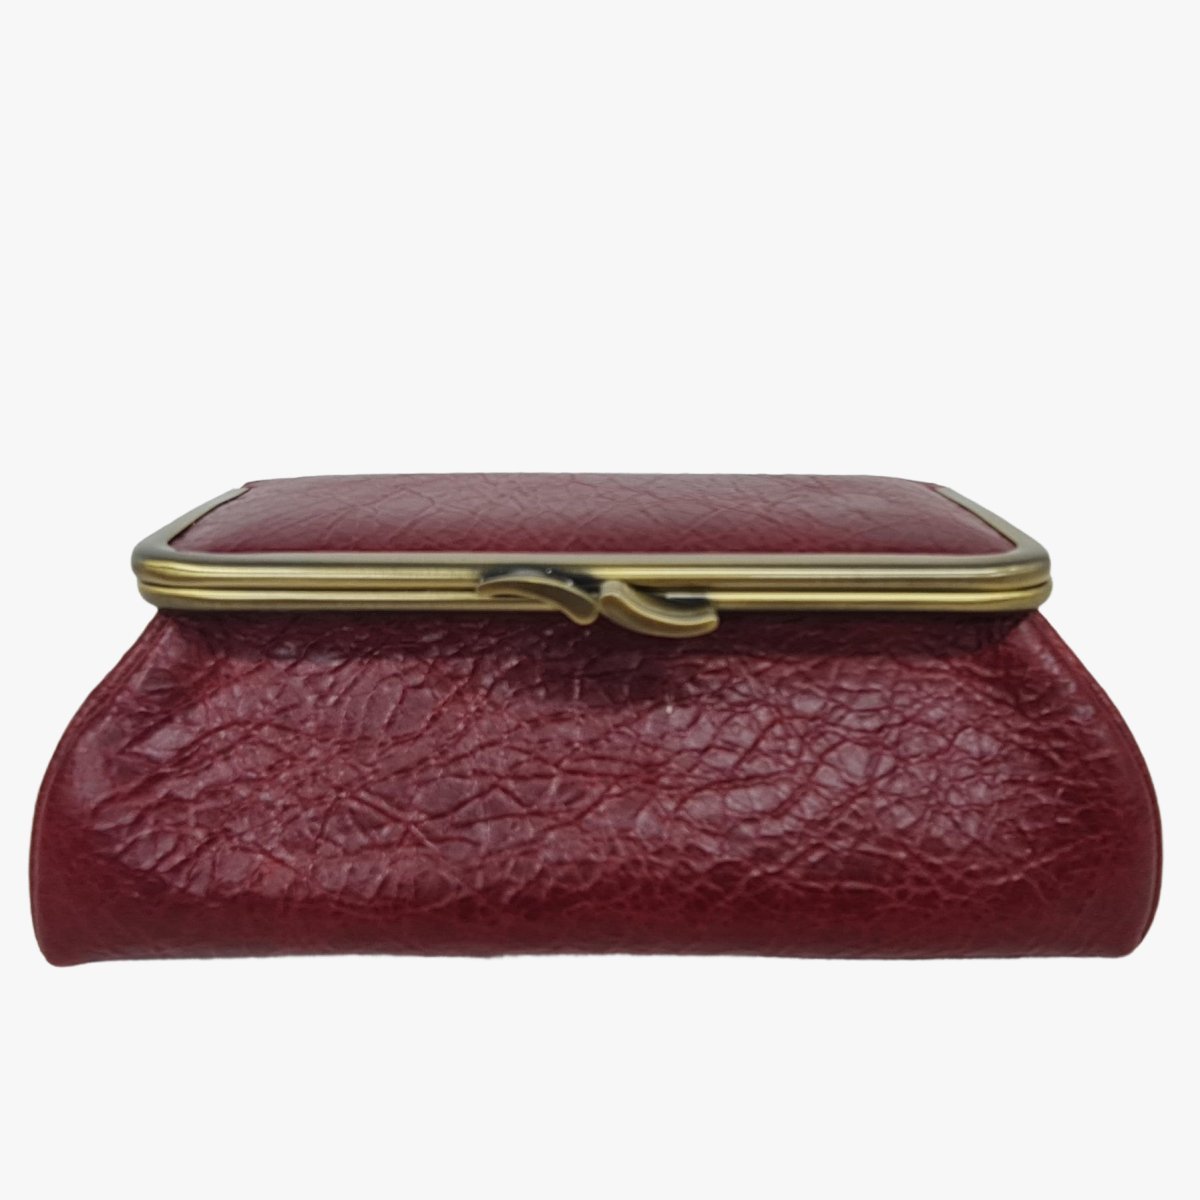 Cranberry Red Genuine Leather Travel Bag - Marina Korneev